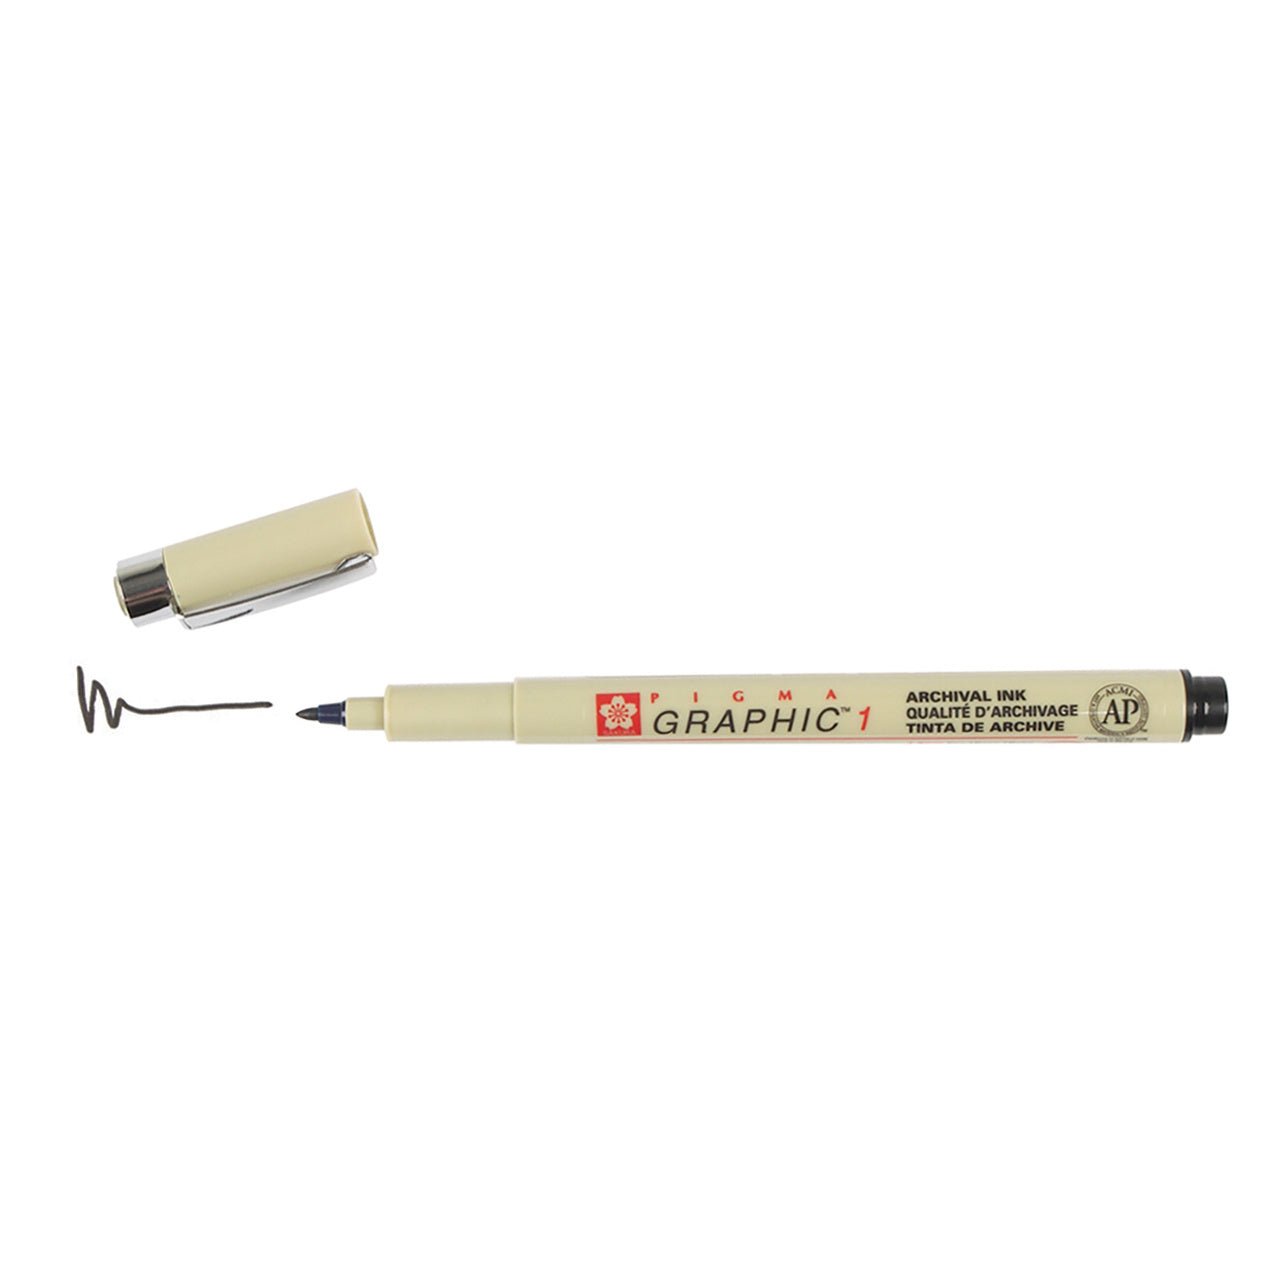 Pentel Brush Sign Pen, 2.0mm tip, Black Ink, 1 Pack of 10 pens